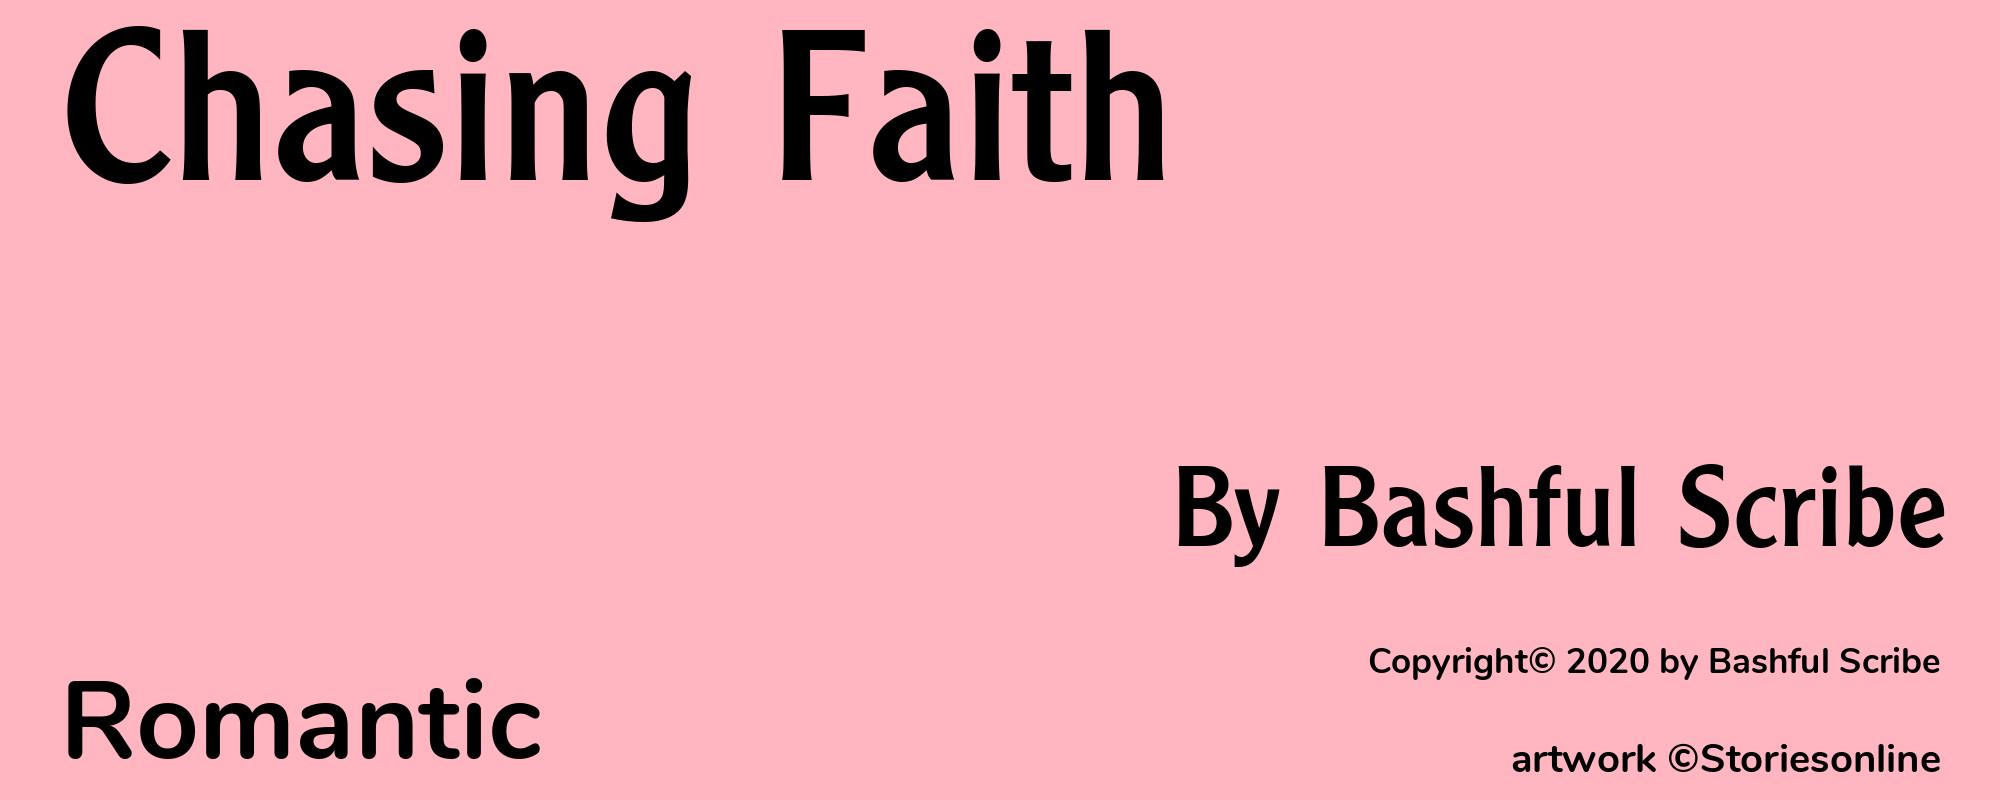 Chasing Faith - Cover